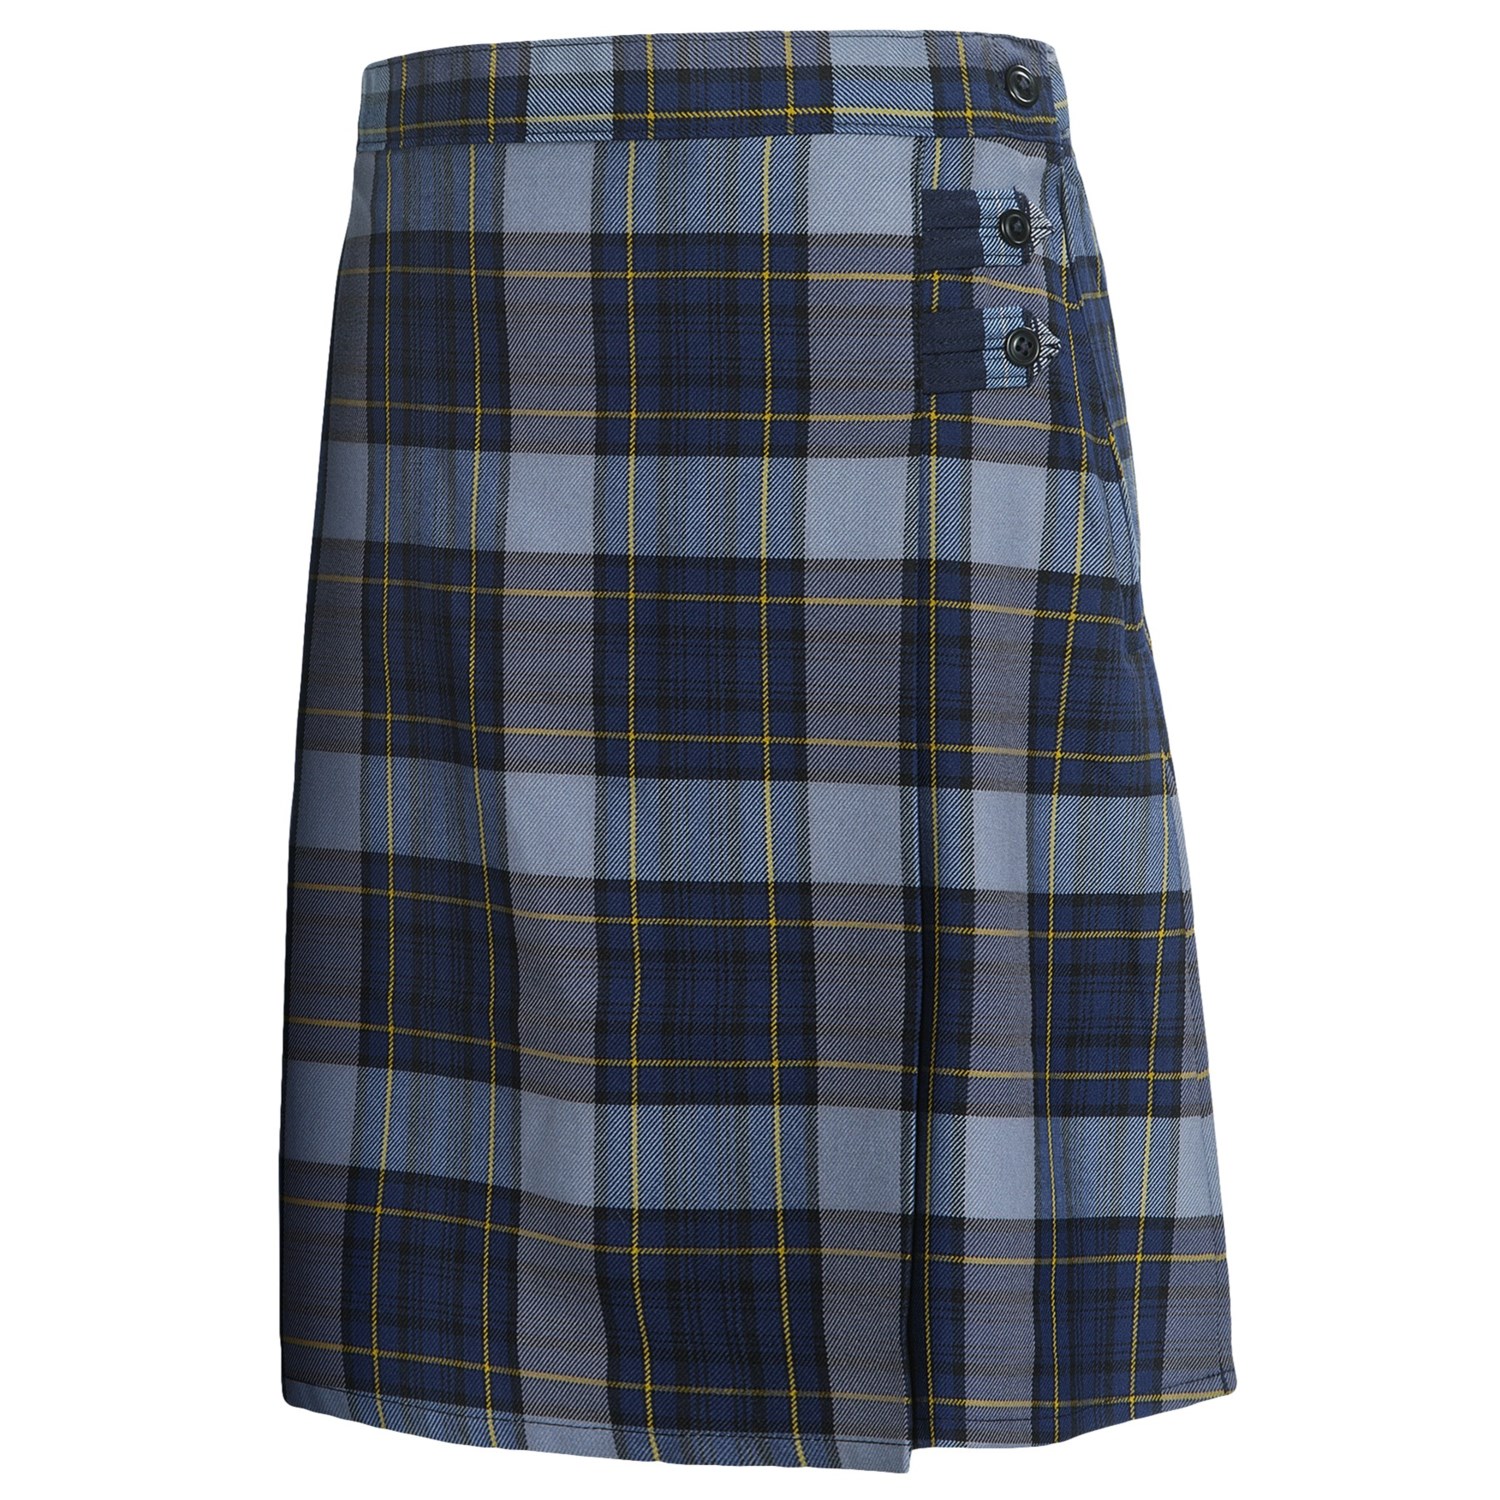 Plaid Uniform Skirt 47